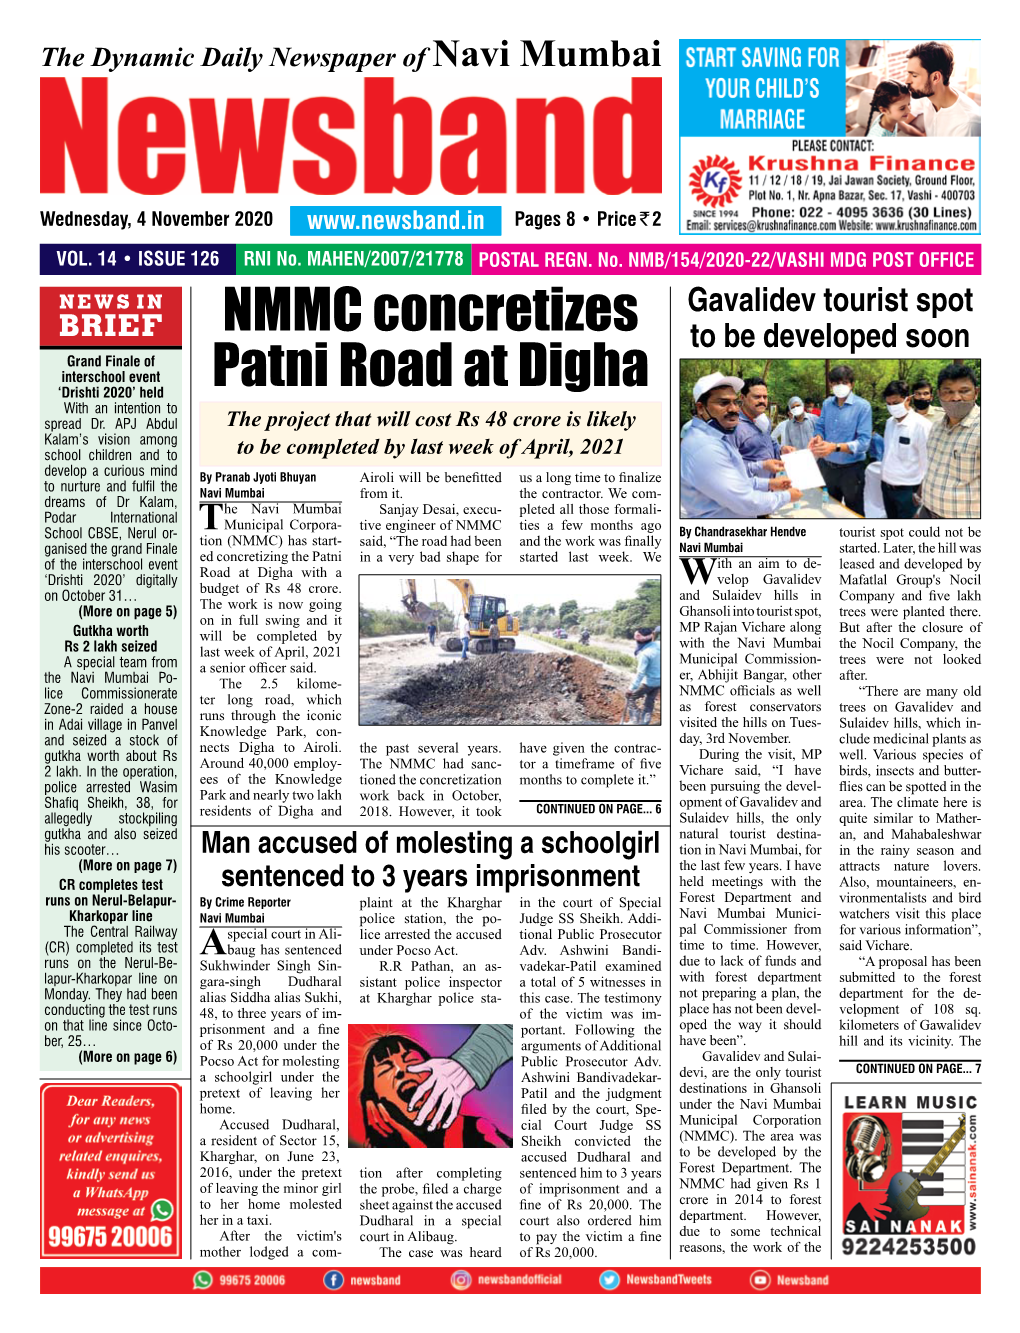 NMMC Concretizes Patni Road at Digha